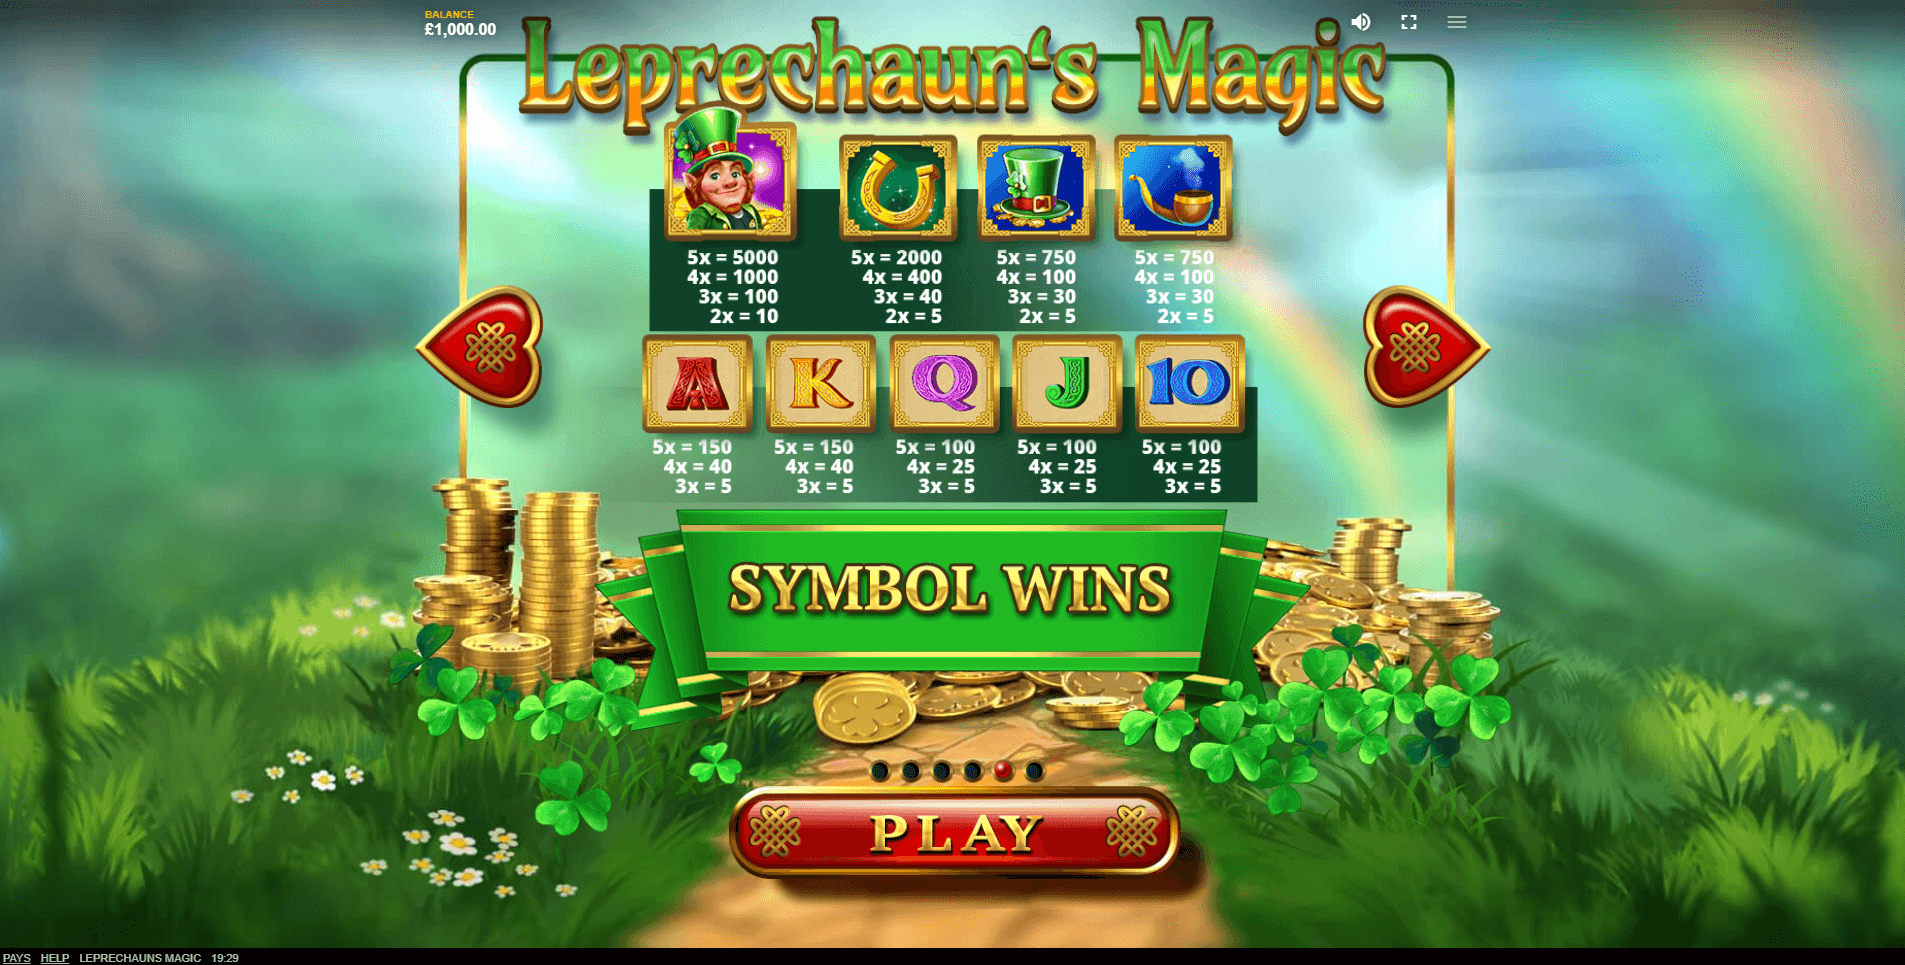 leprechauns magic slot machine detail image 3